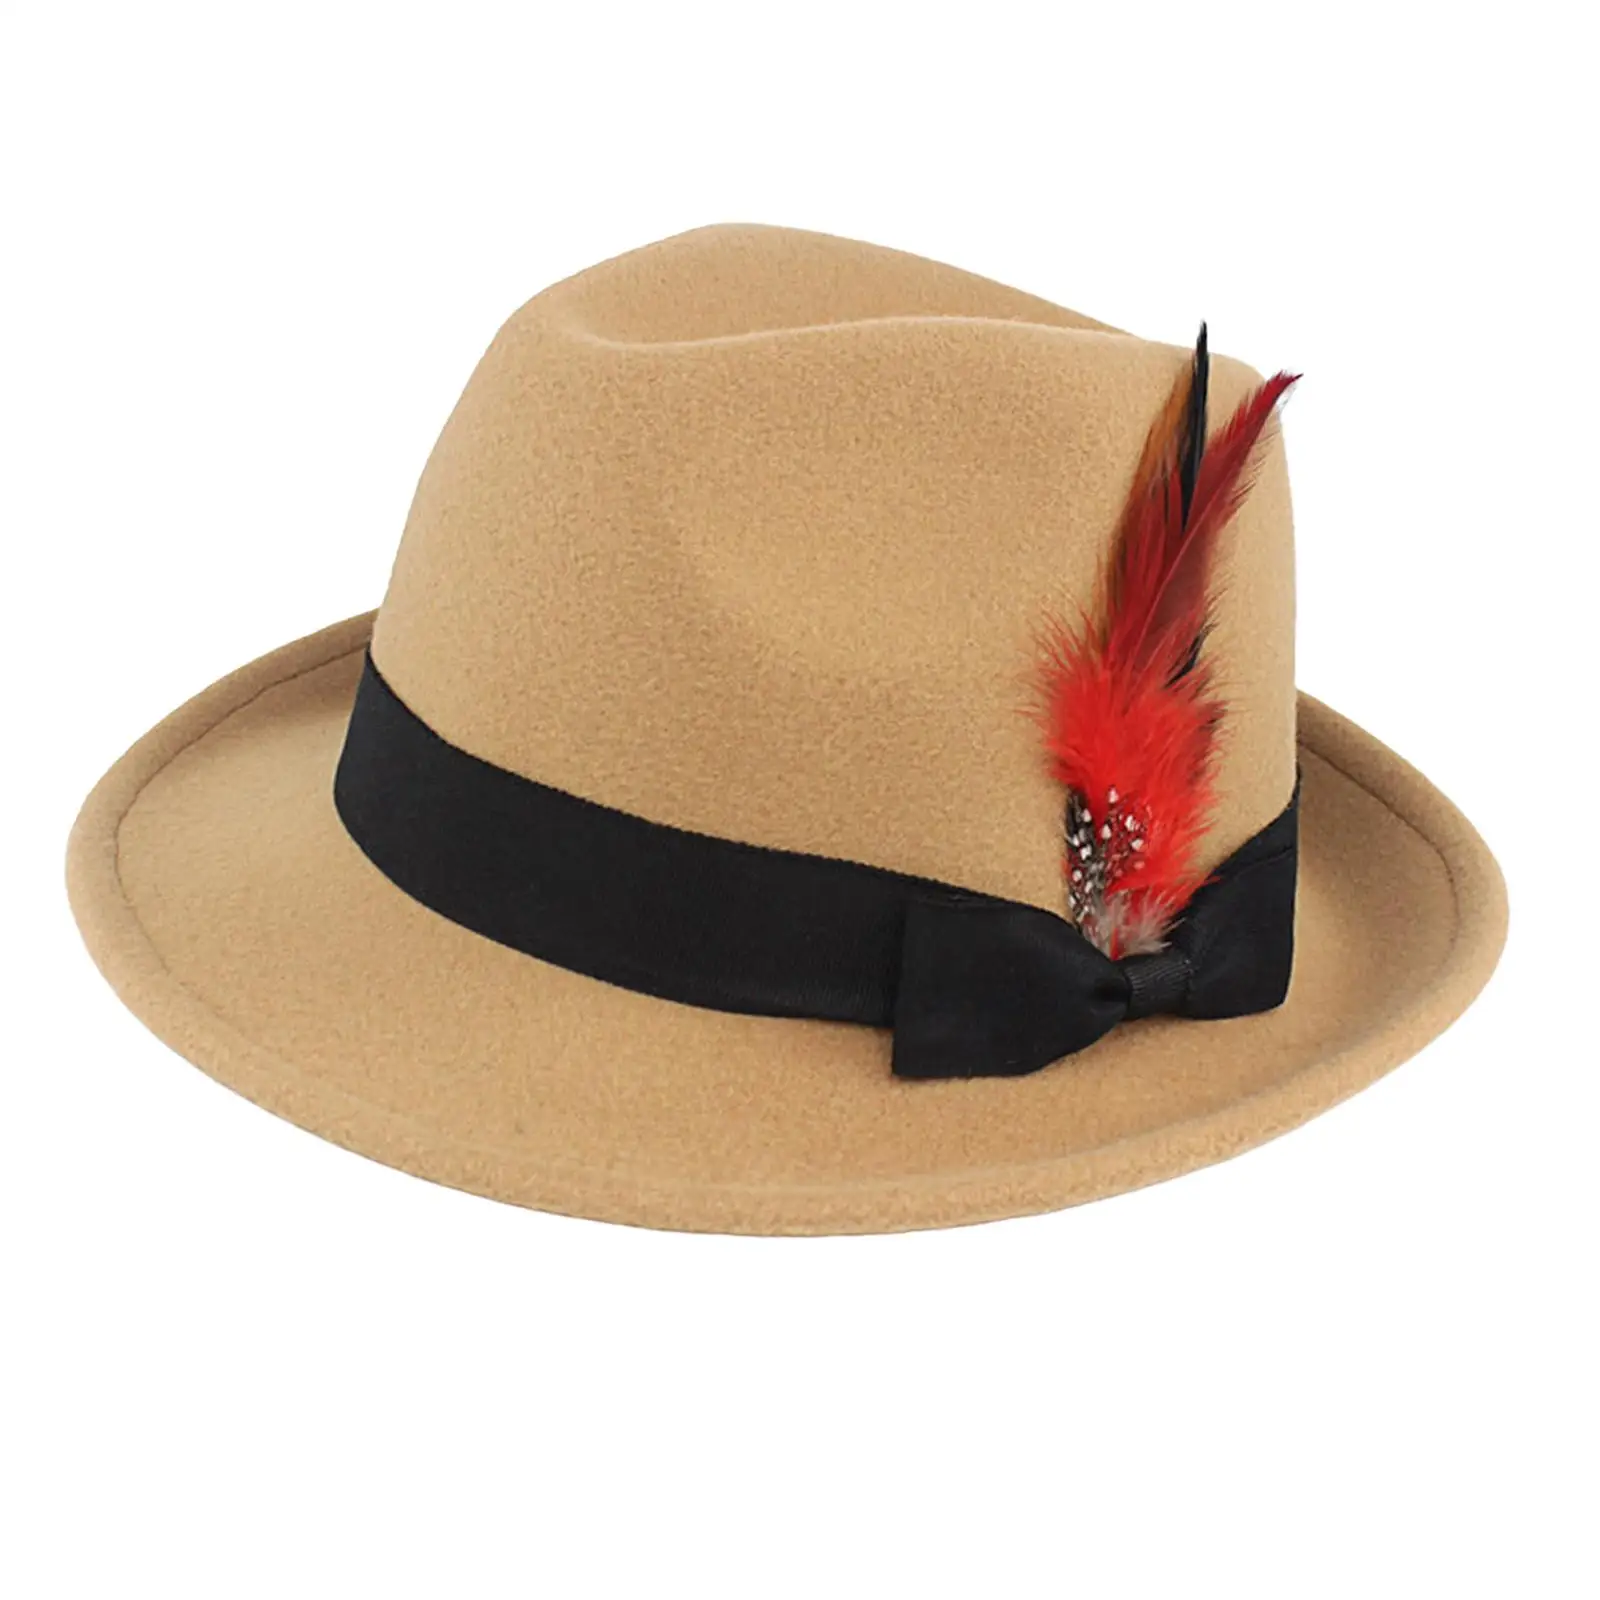 Panama Jazz Top Hat Short Brim Sunhat Photo Props Casual Felt Fedora Hats for Men and Women Dress up Accessories Decorative